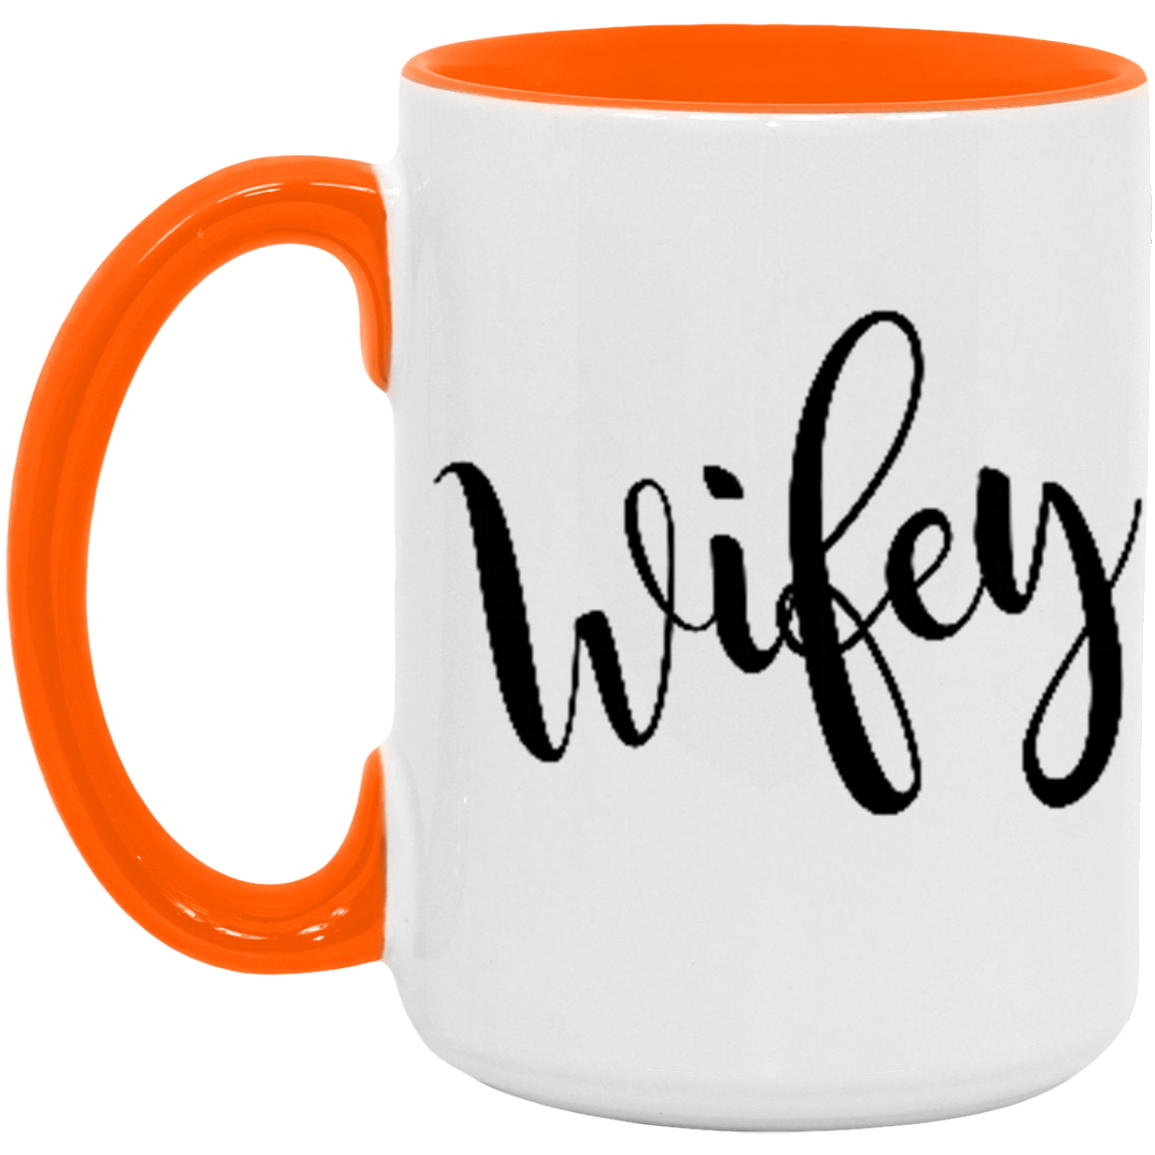 Wifey Coffee Mug